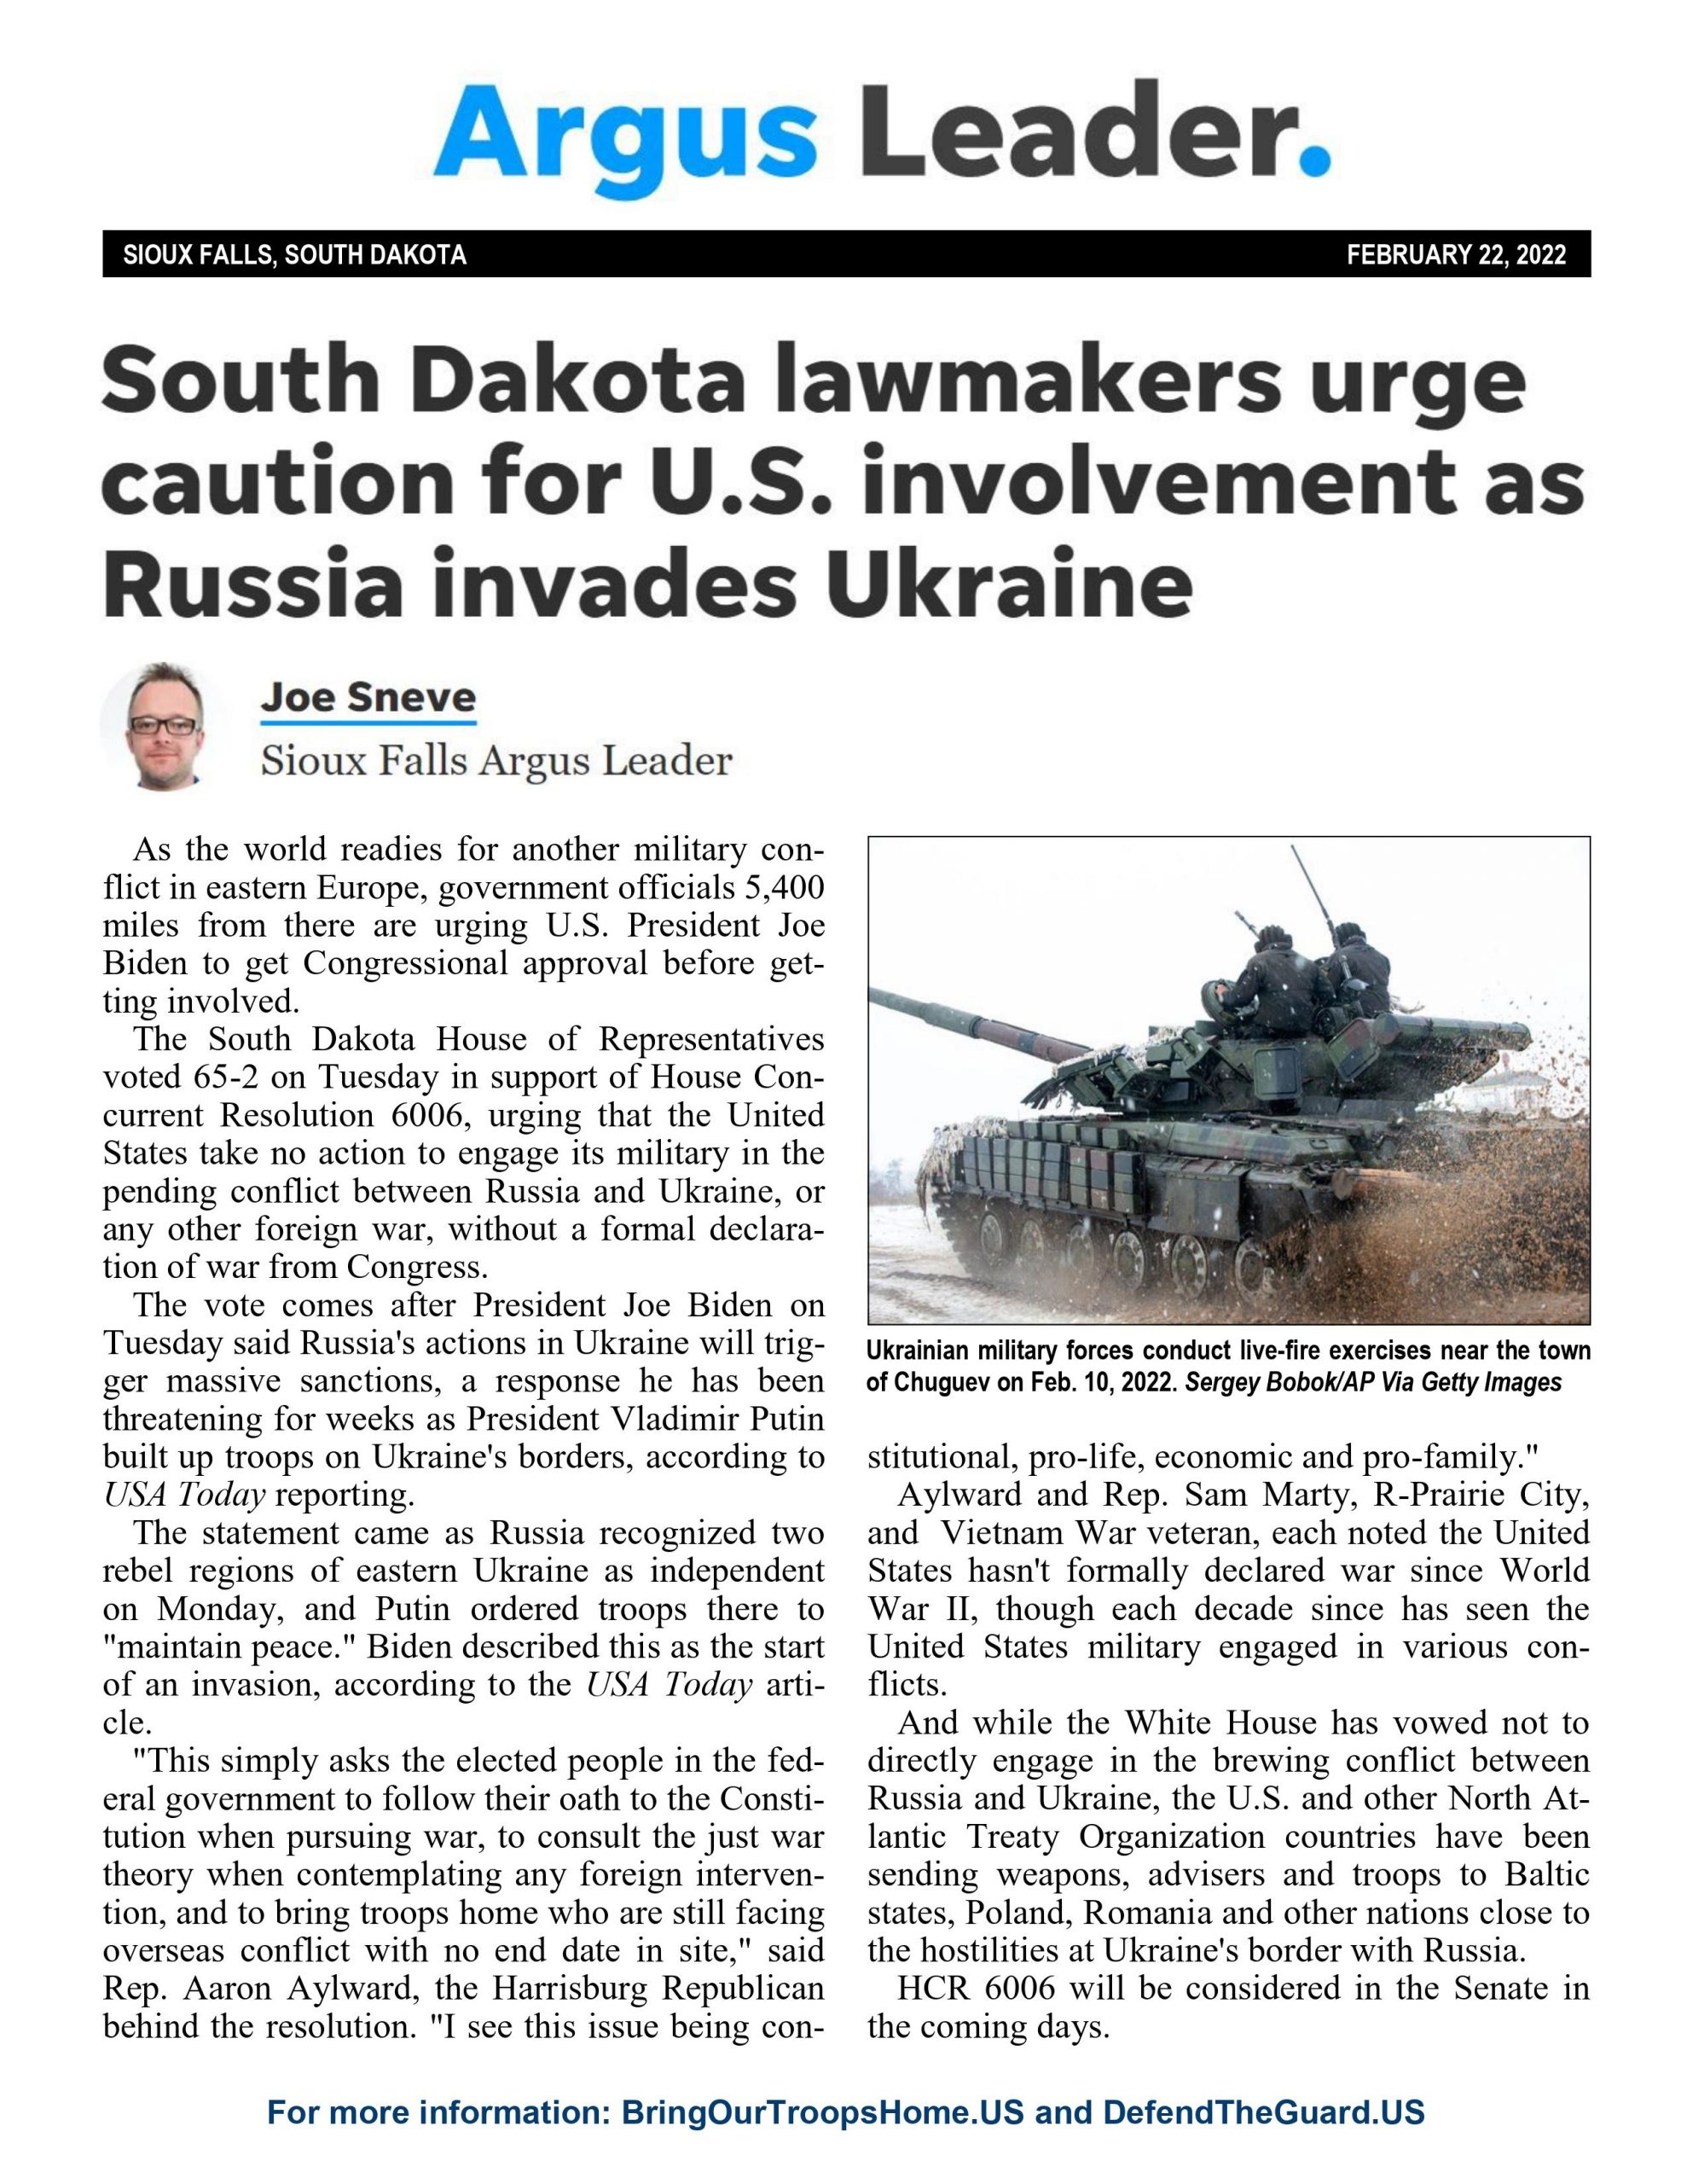 South Dakota Lawmakers Urge Caution for U.S. Involvement as Russia Invades Ukraine